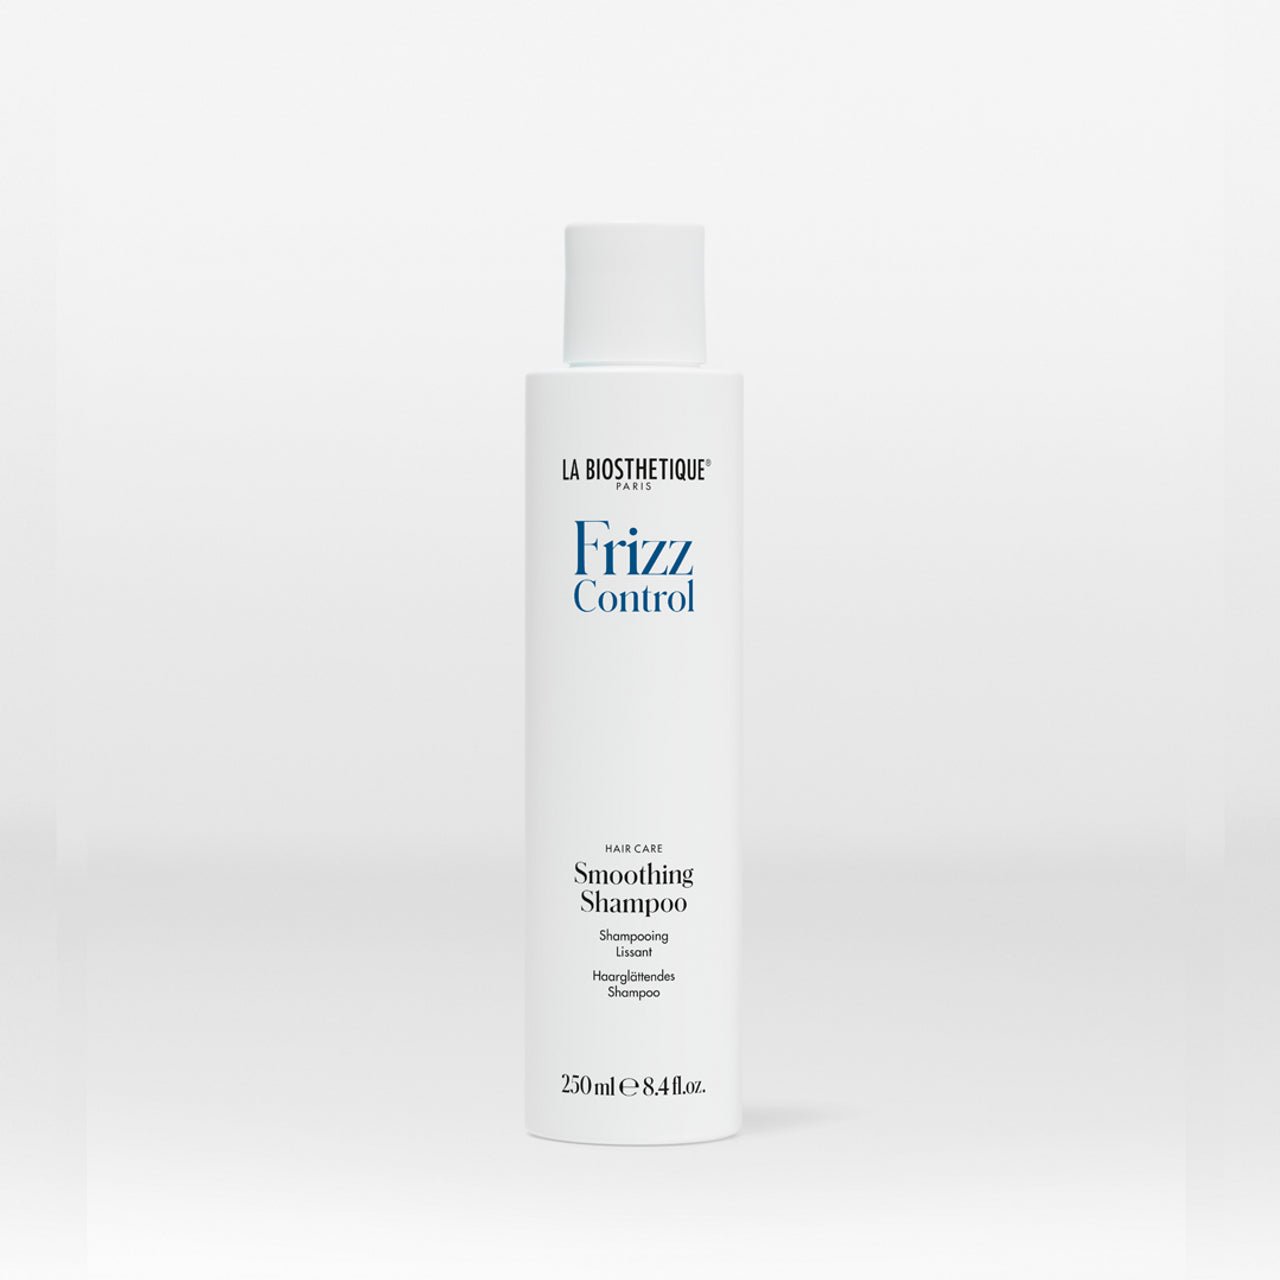 La Biosthetique Frizz Control Smoothing Shampoo 250ml - shelley and co